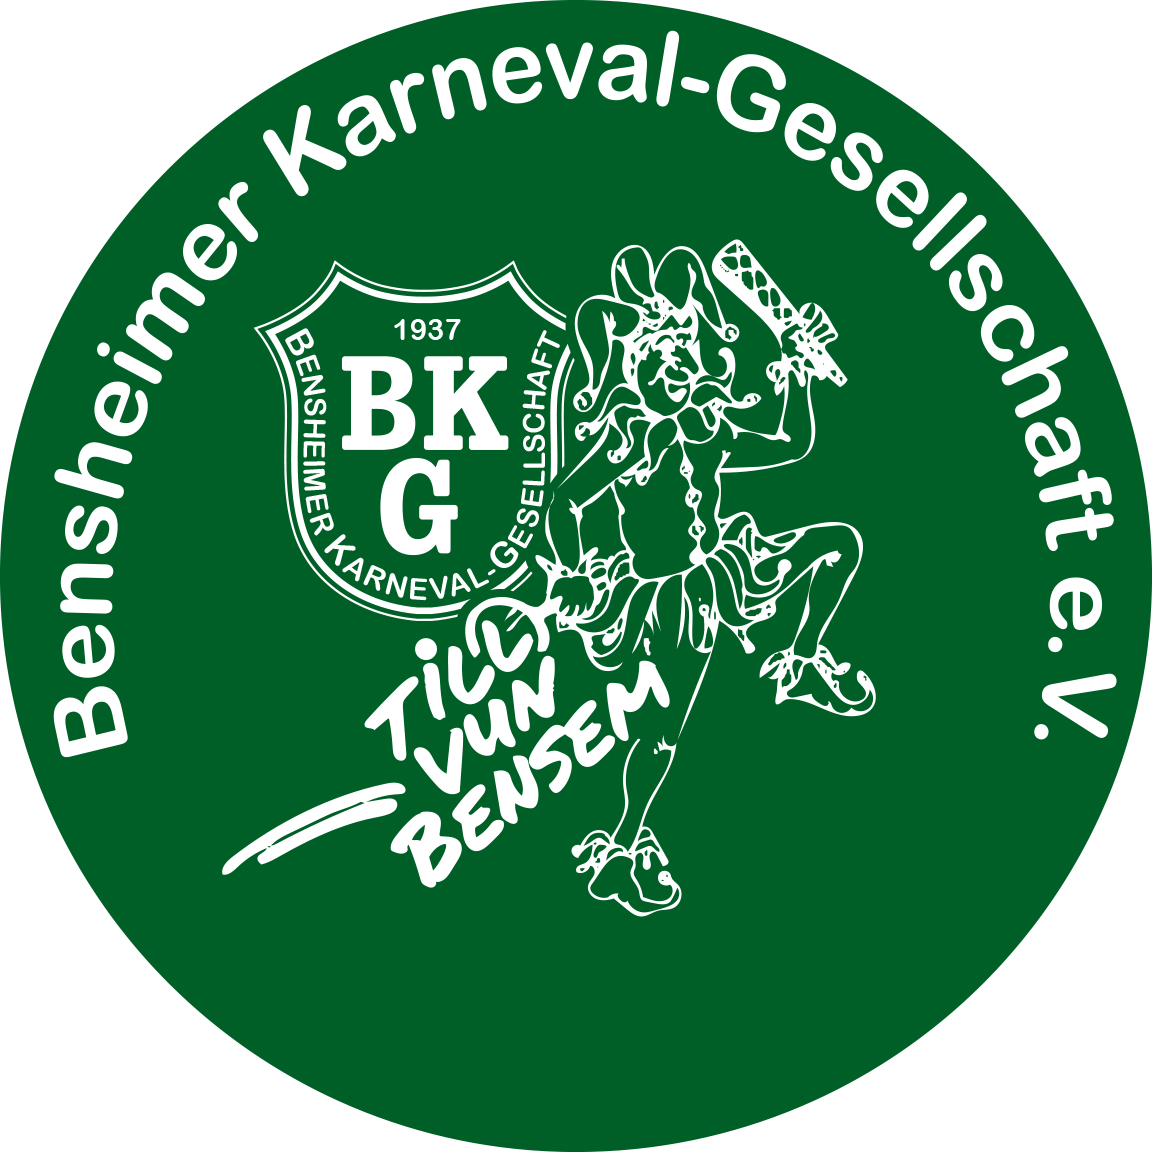 Elferratssitzung der Bensheimer Karneval-Gesellschaft